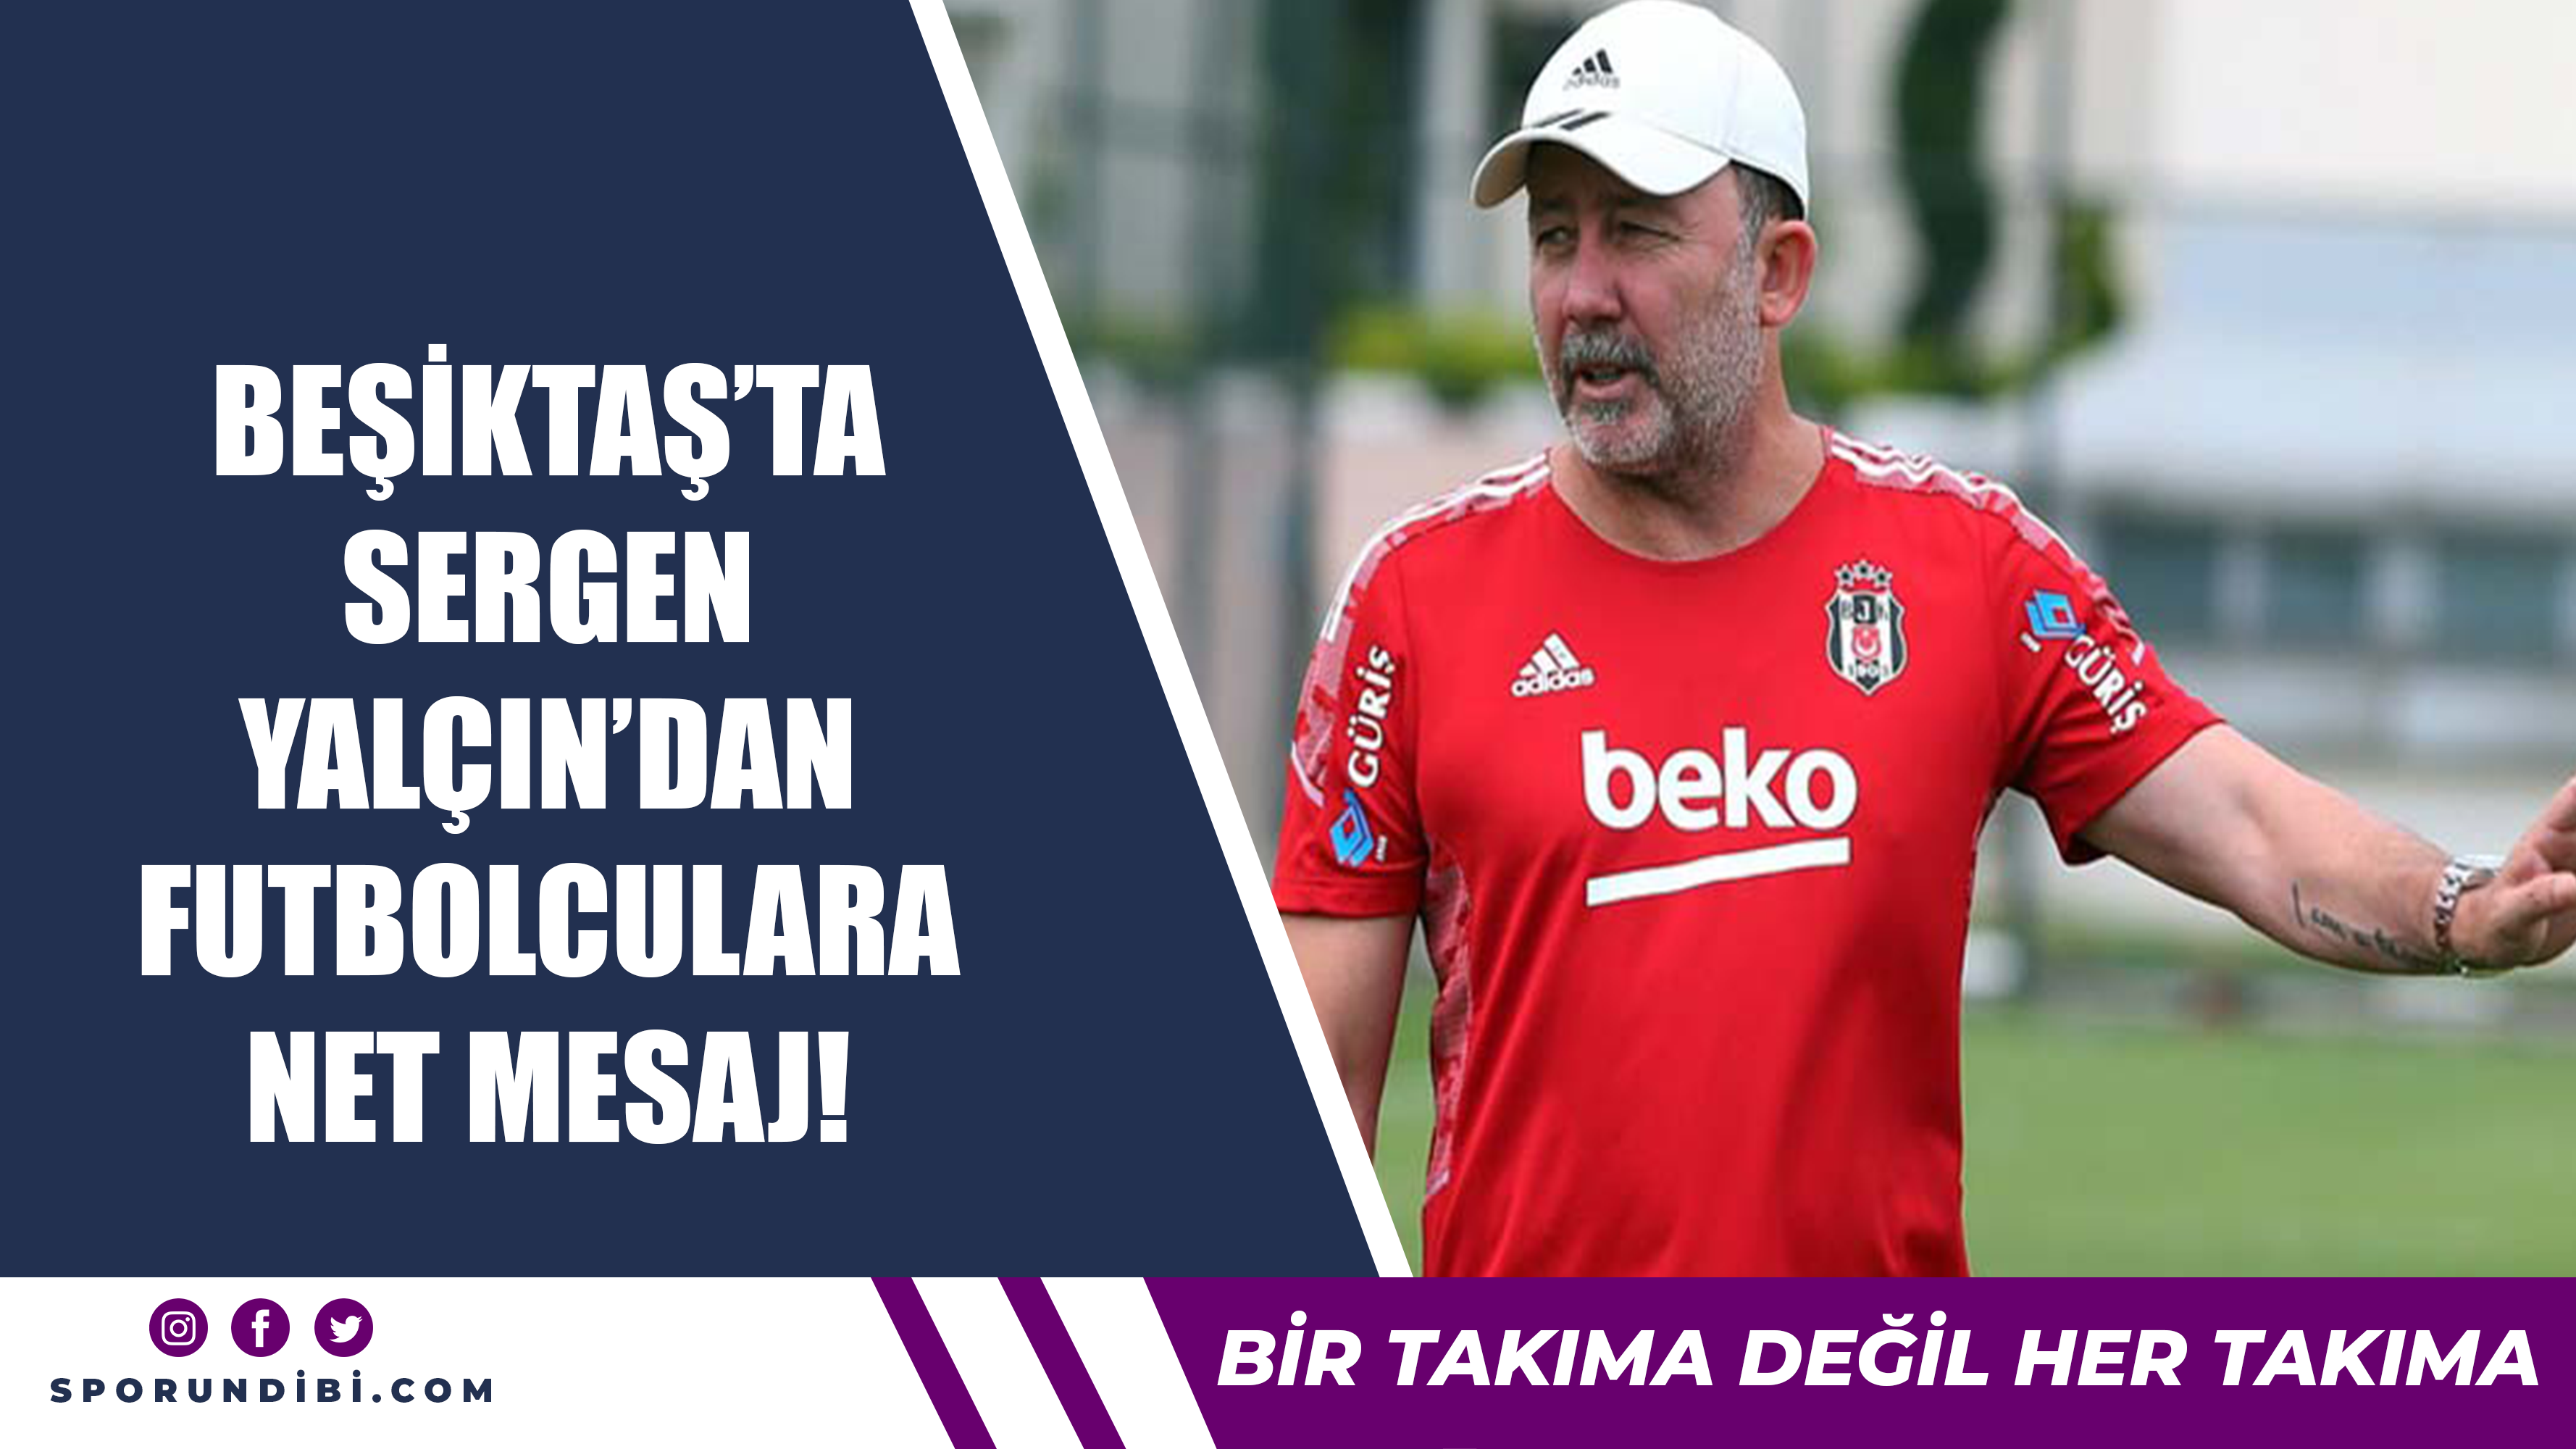 Beşiktaş'ta Sergen Yalçın'dan futbolculara net mesaj!